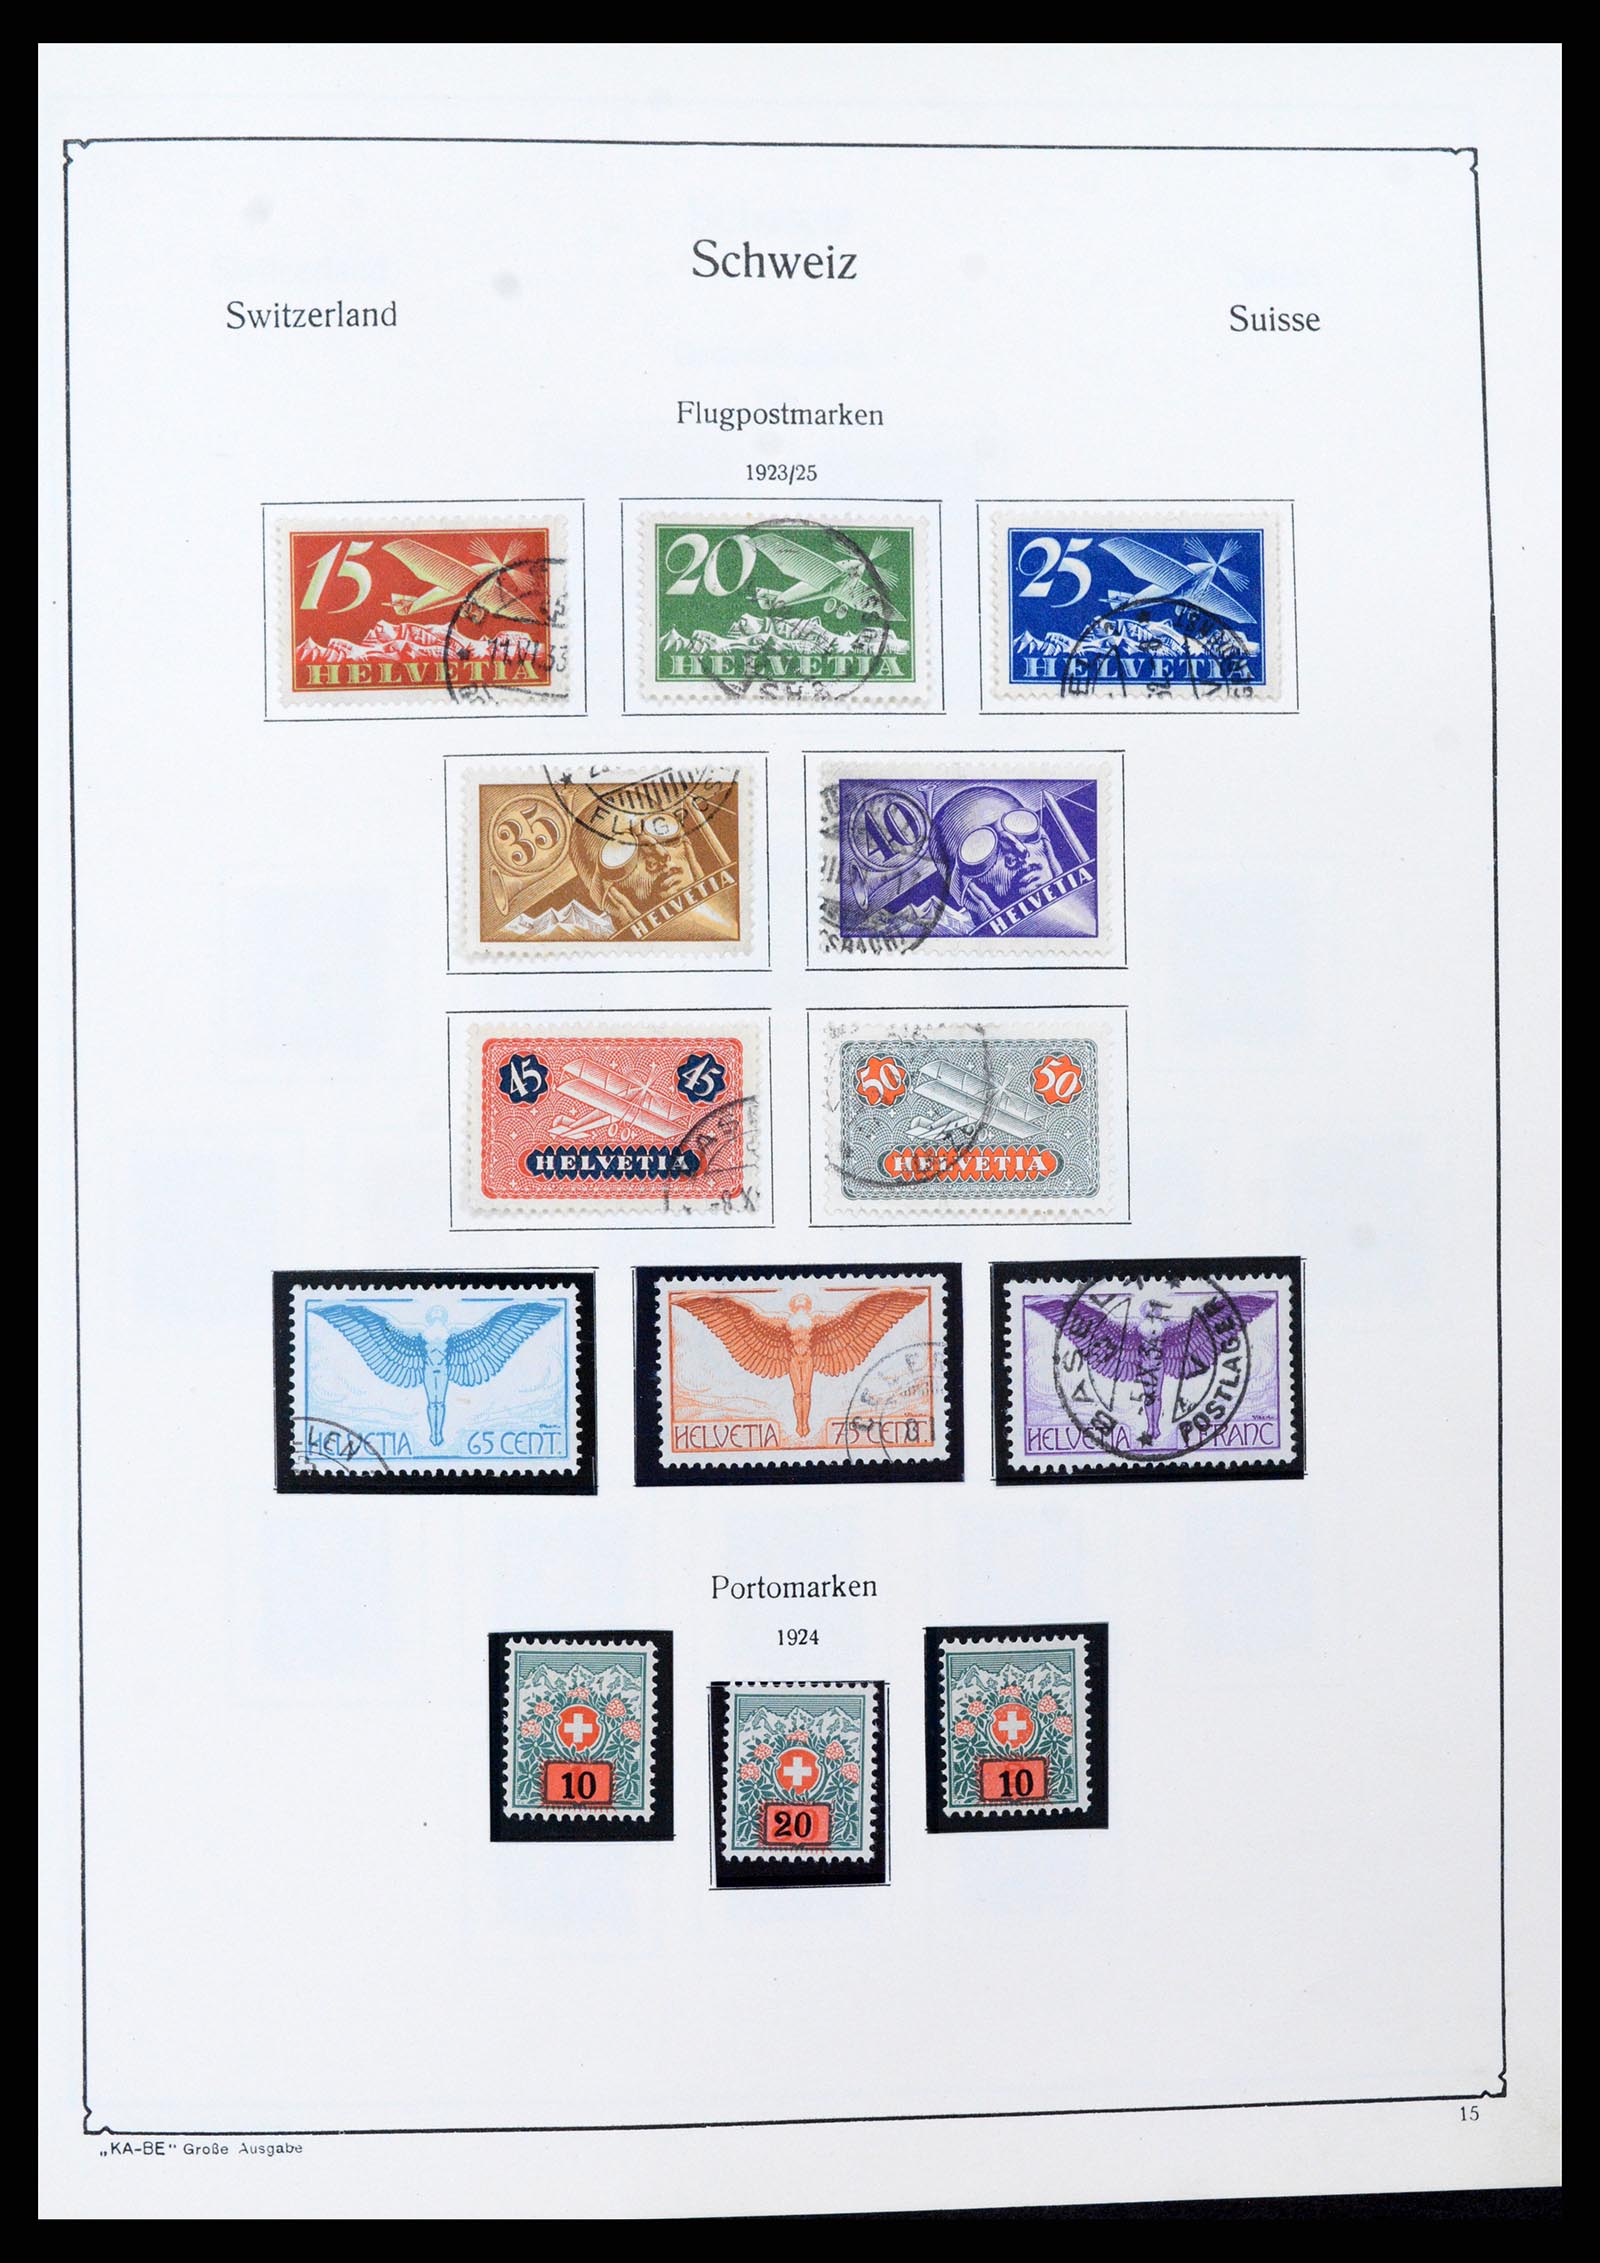 37588 014 - Stamp collection 37588 Switzerland 1854-1974.